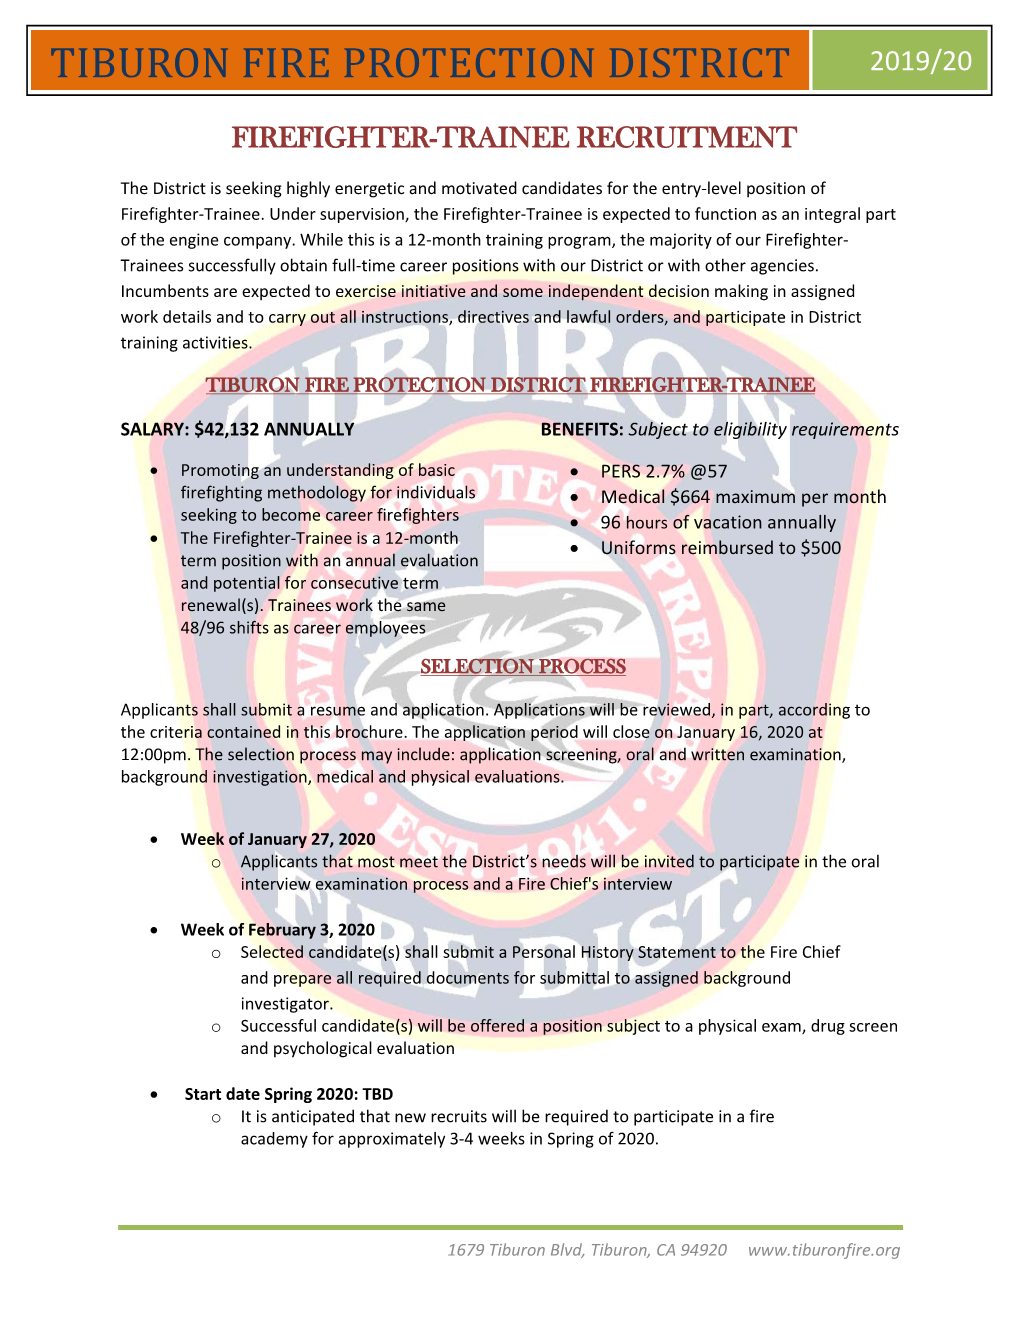 Firefighter-Trainee Recruitment